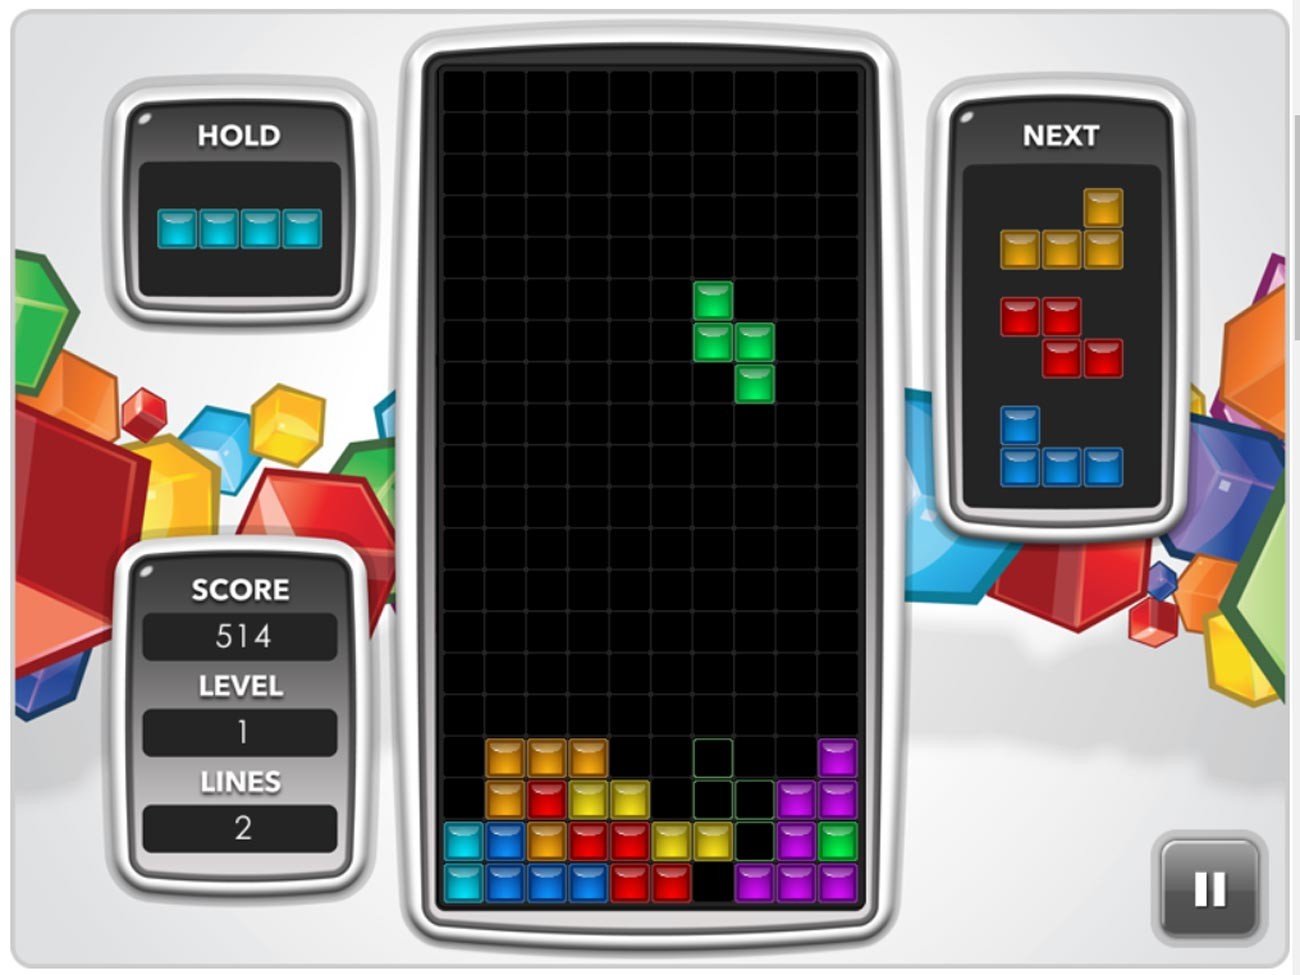 Tetris
